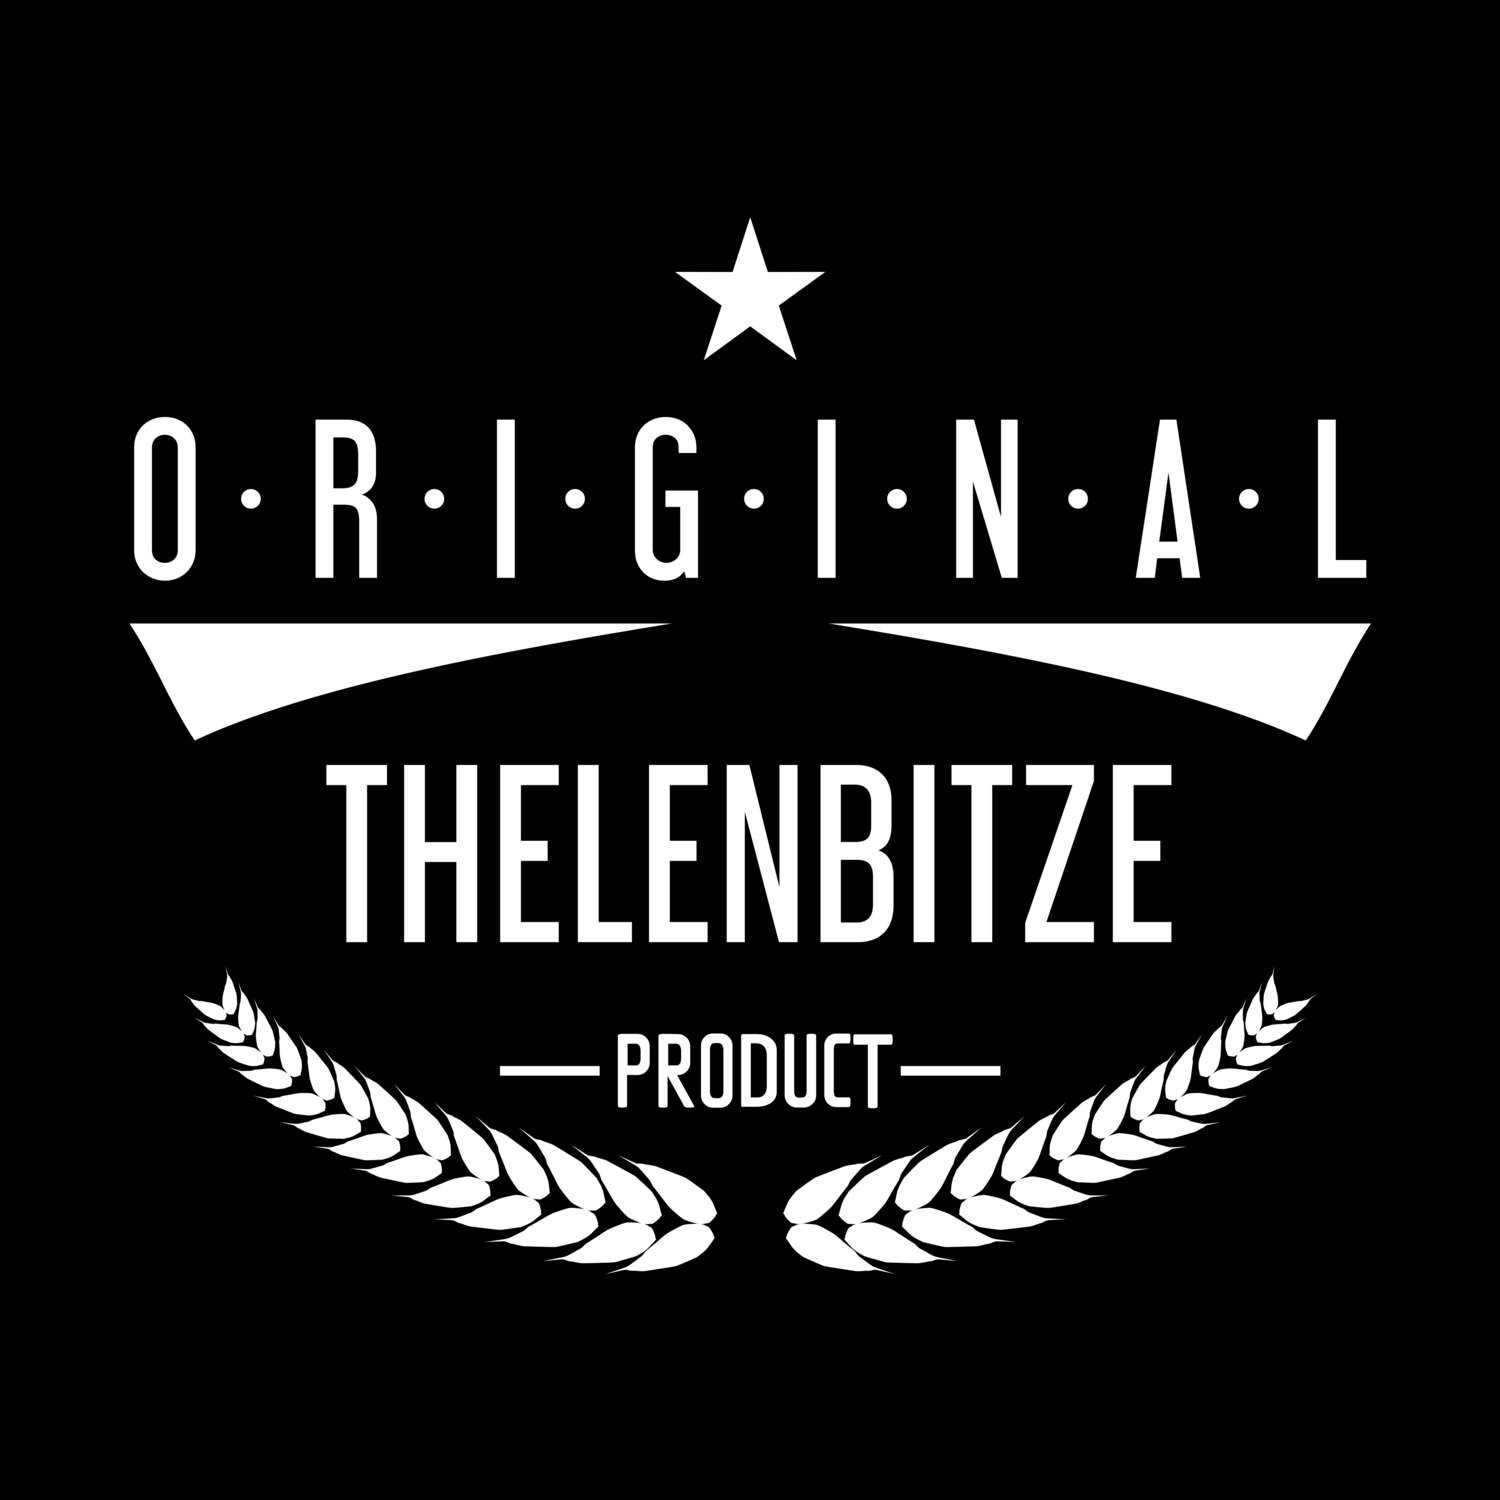 Thelenbitze T-Shirt »Original Product«